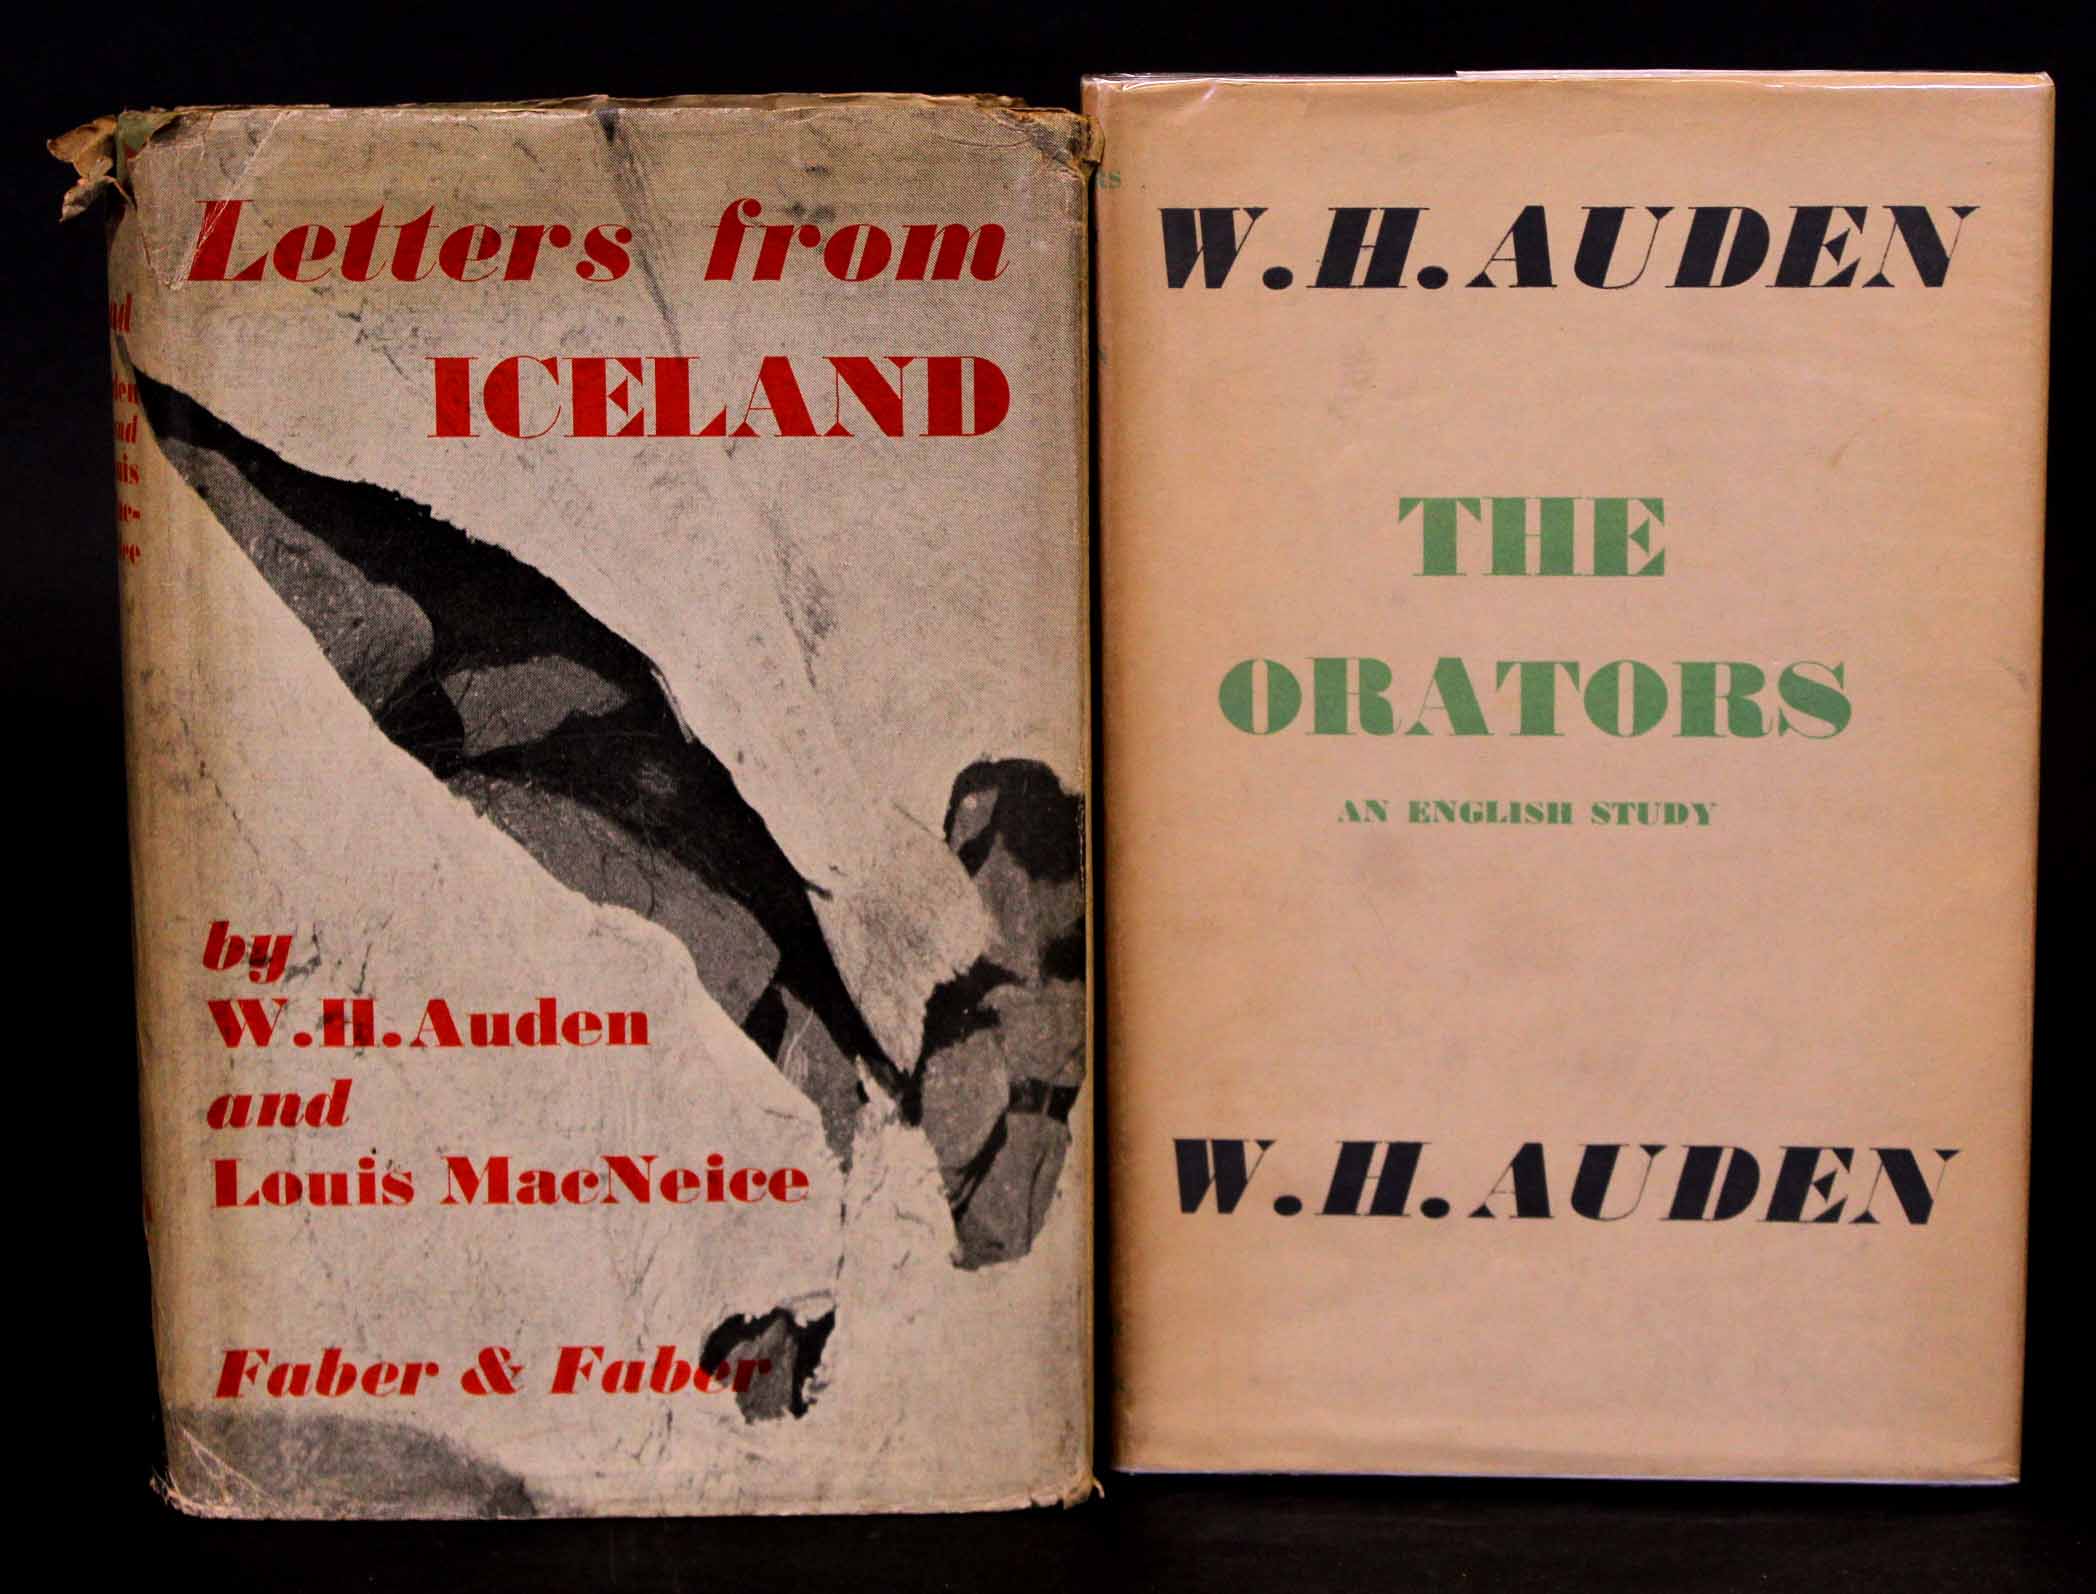 W H AUDEN: THE ORATORS, AN ENGLISH STUDY, London, Faber & Faber, 1932, 1st edition, original